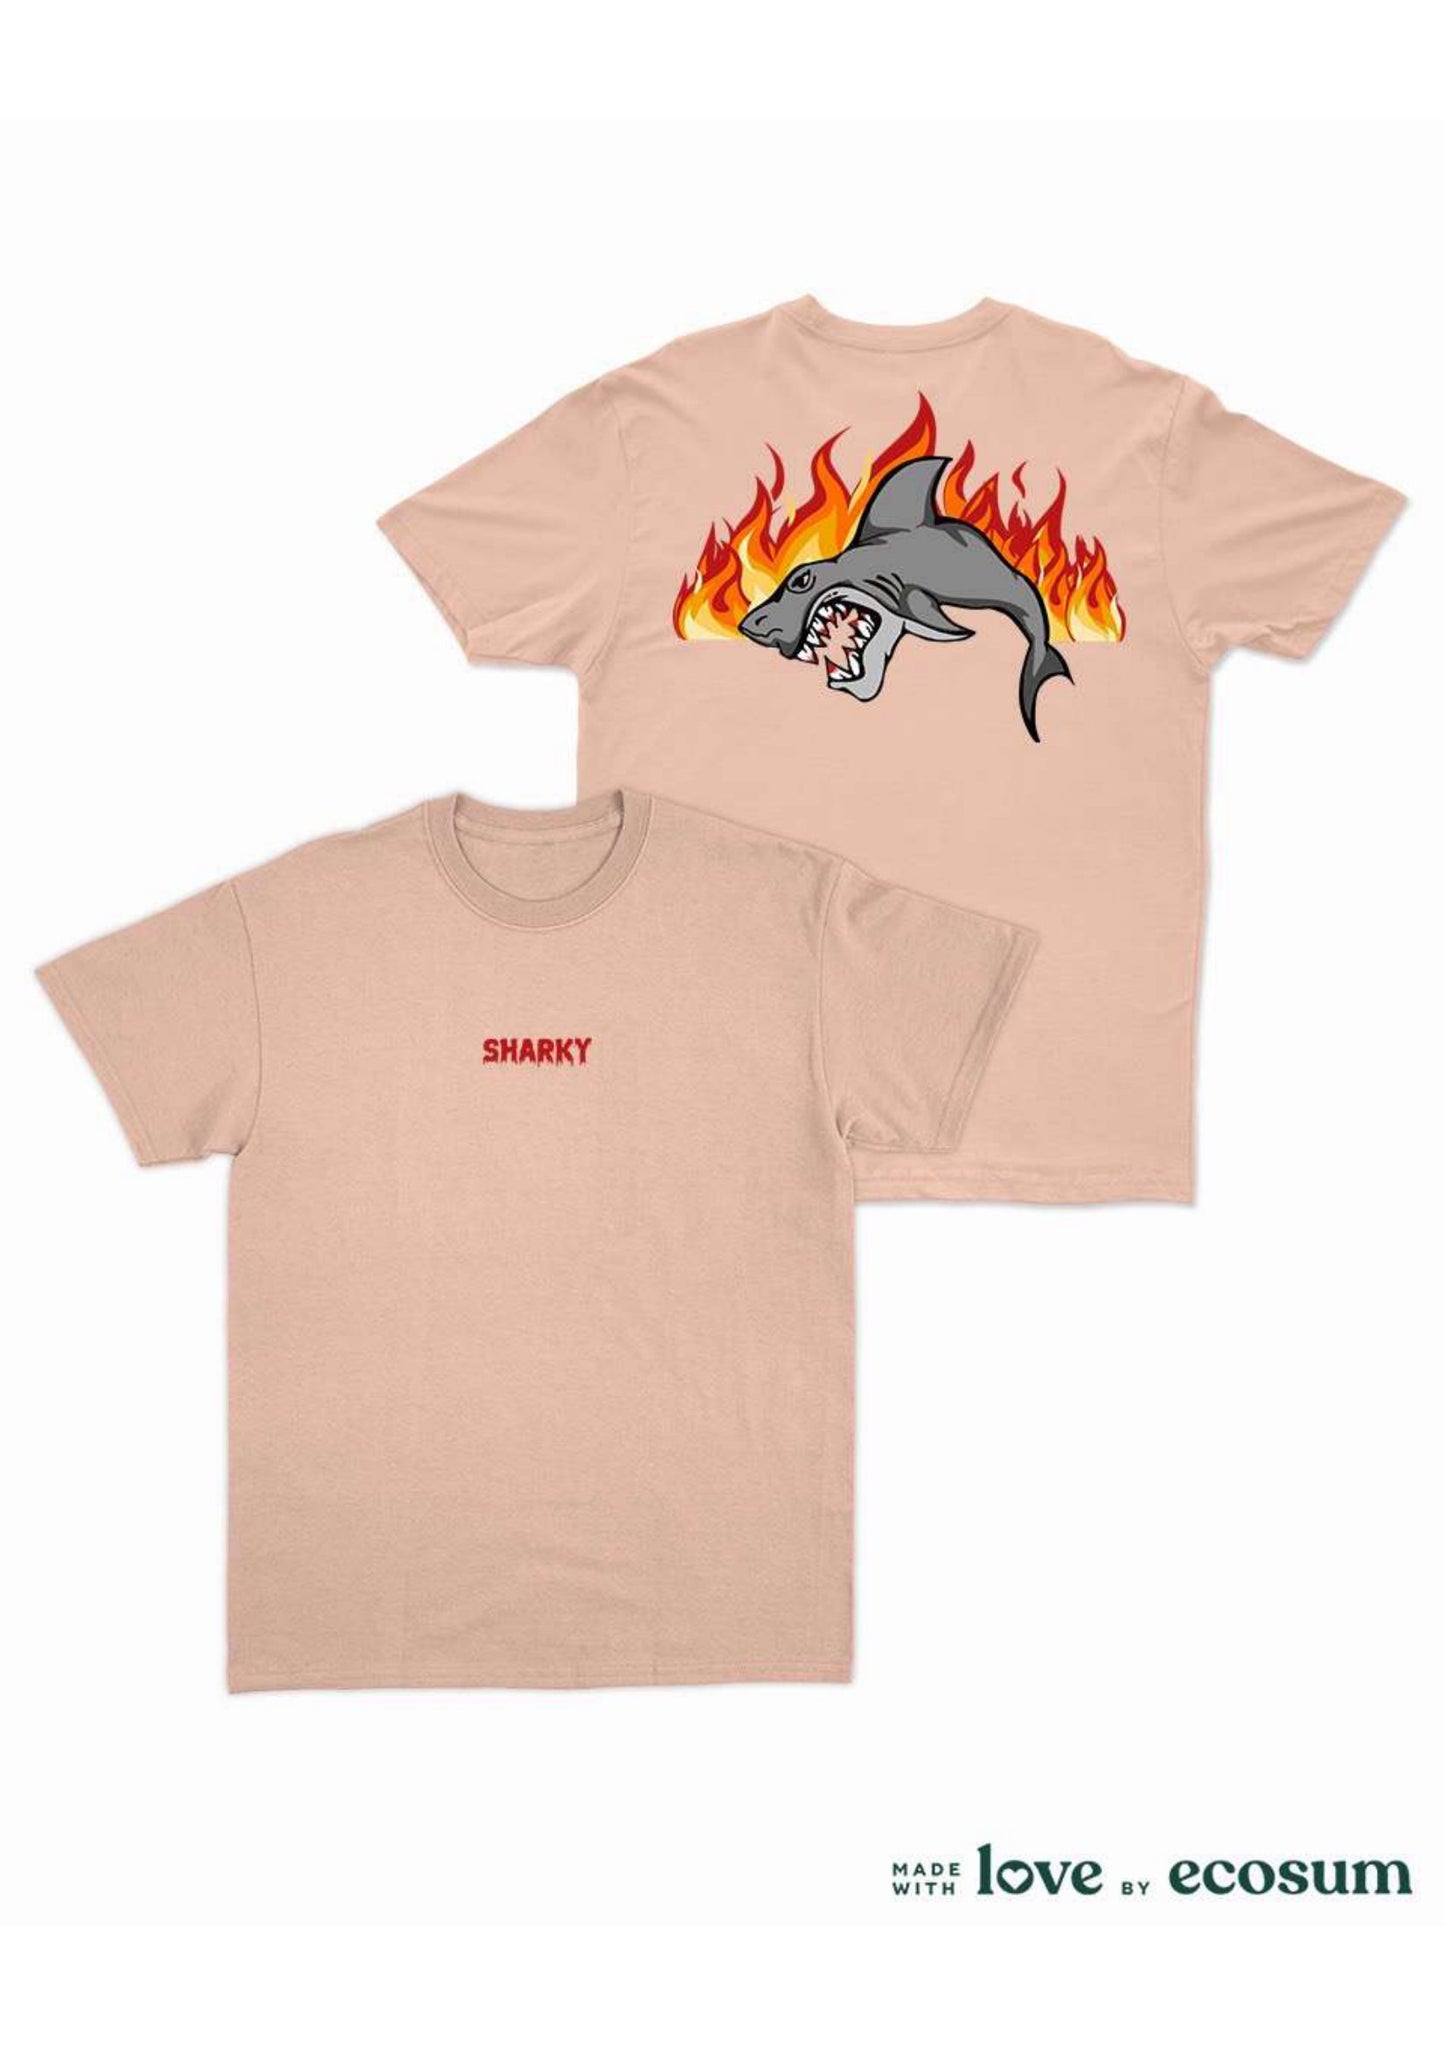 T-shirt Sharky - back&front